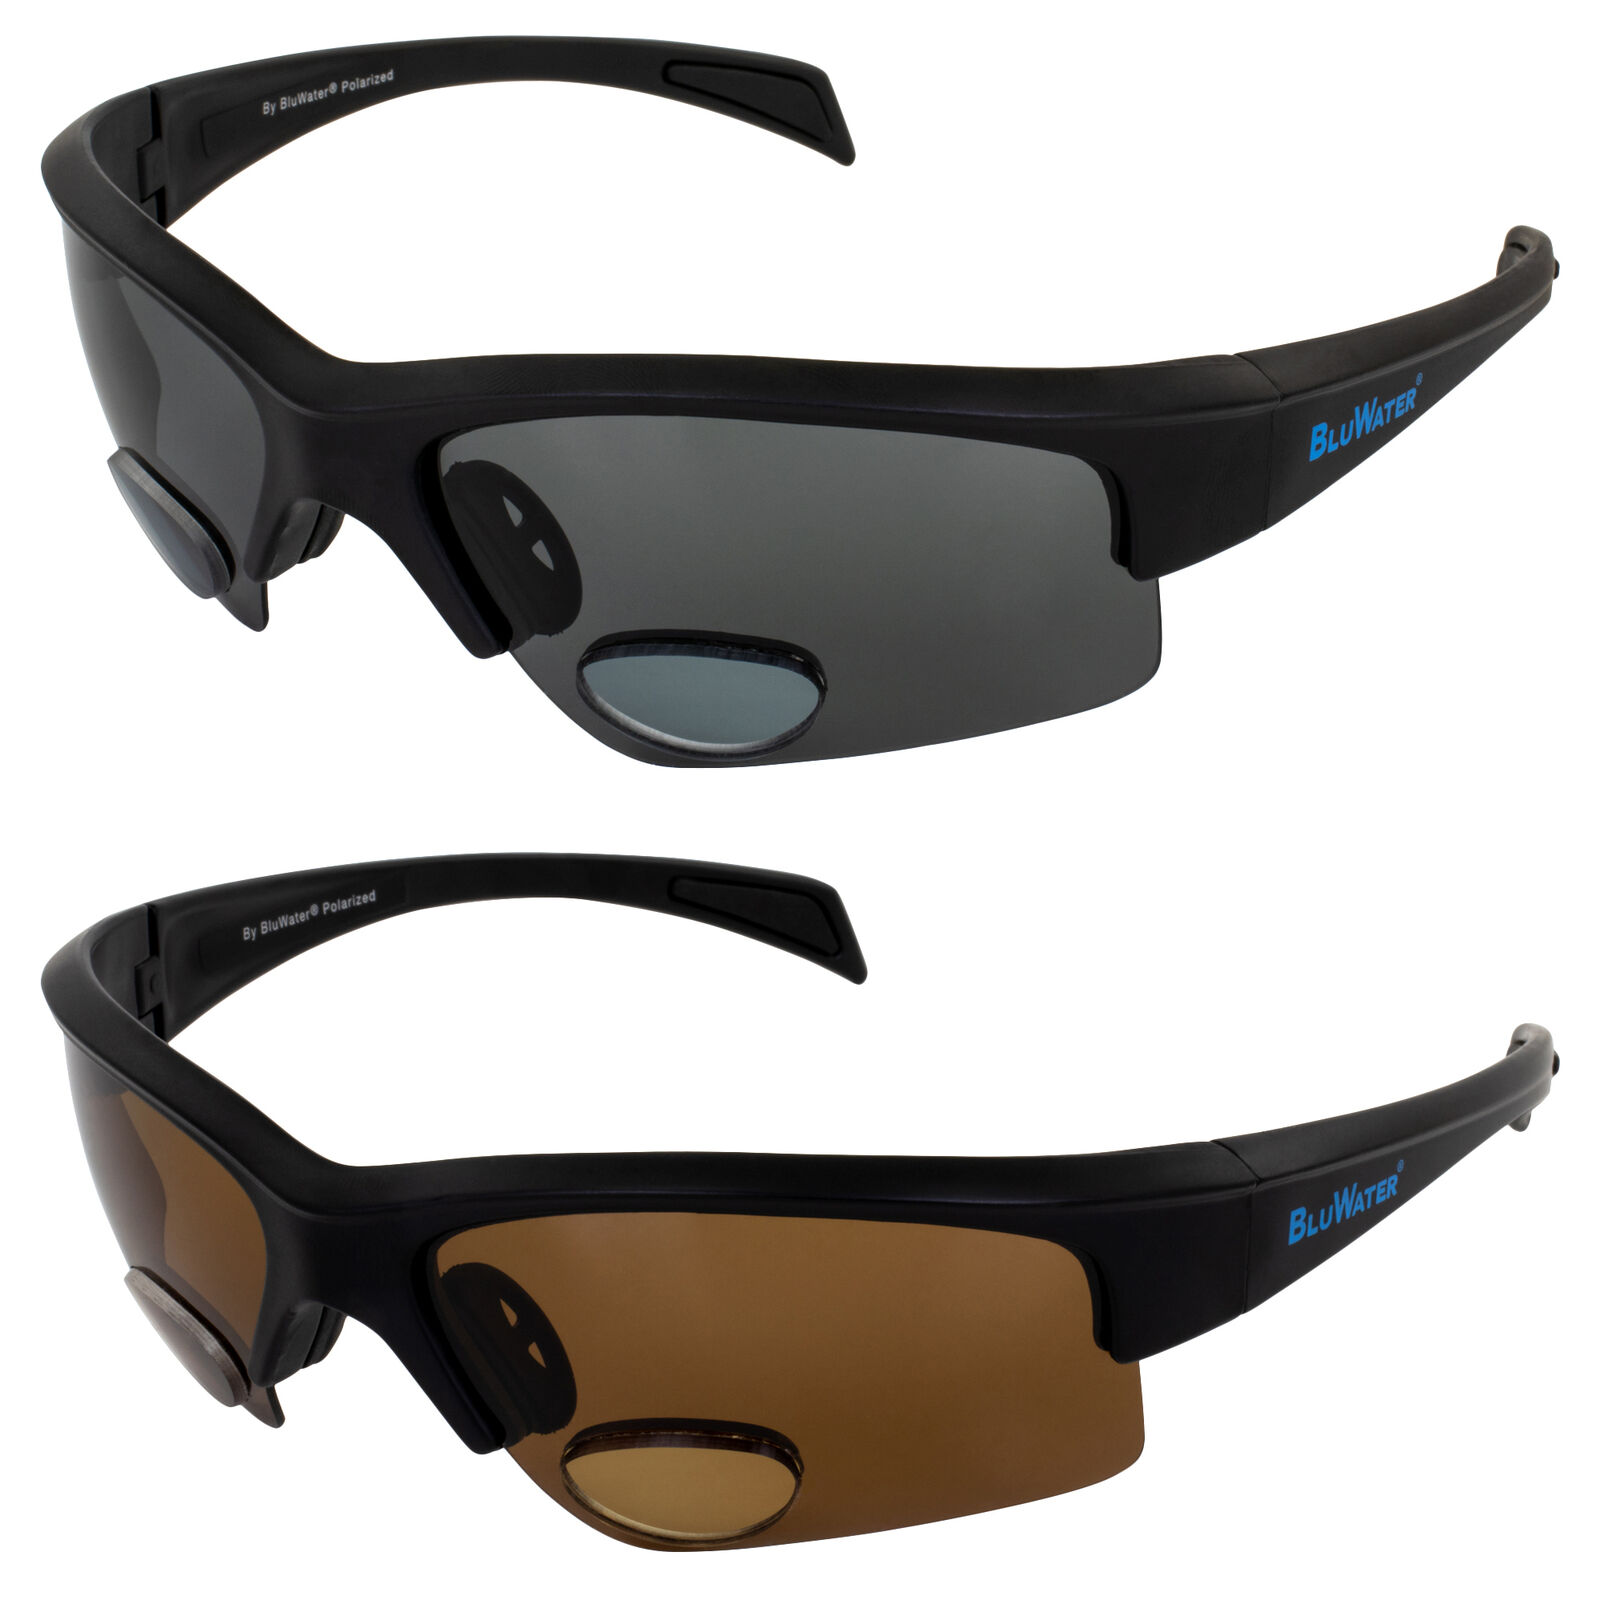 Global Vision BluWater Bifocal 2 Polarized Sunglasses Scratch-Resistant Black